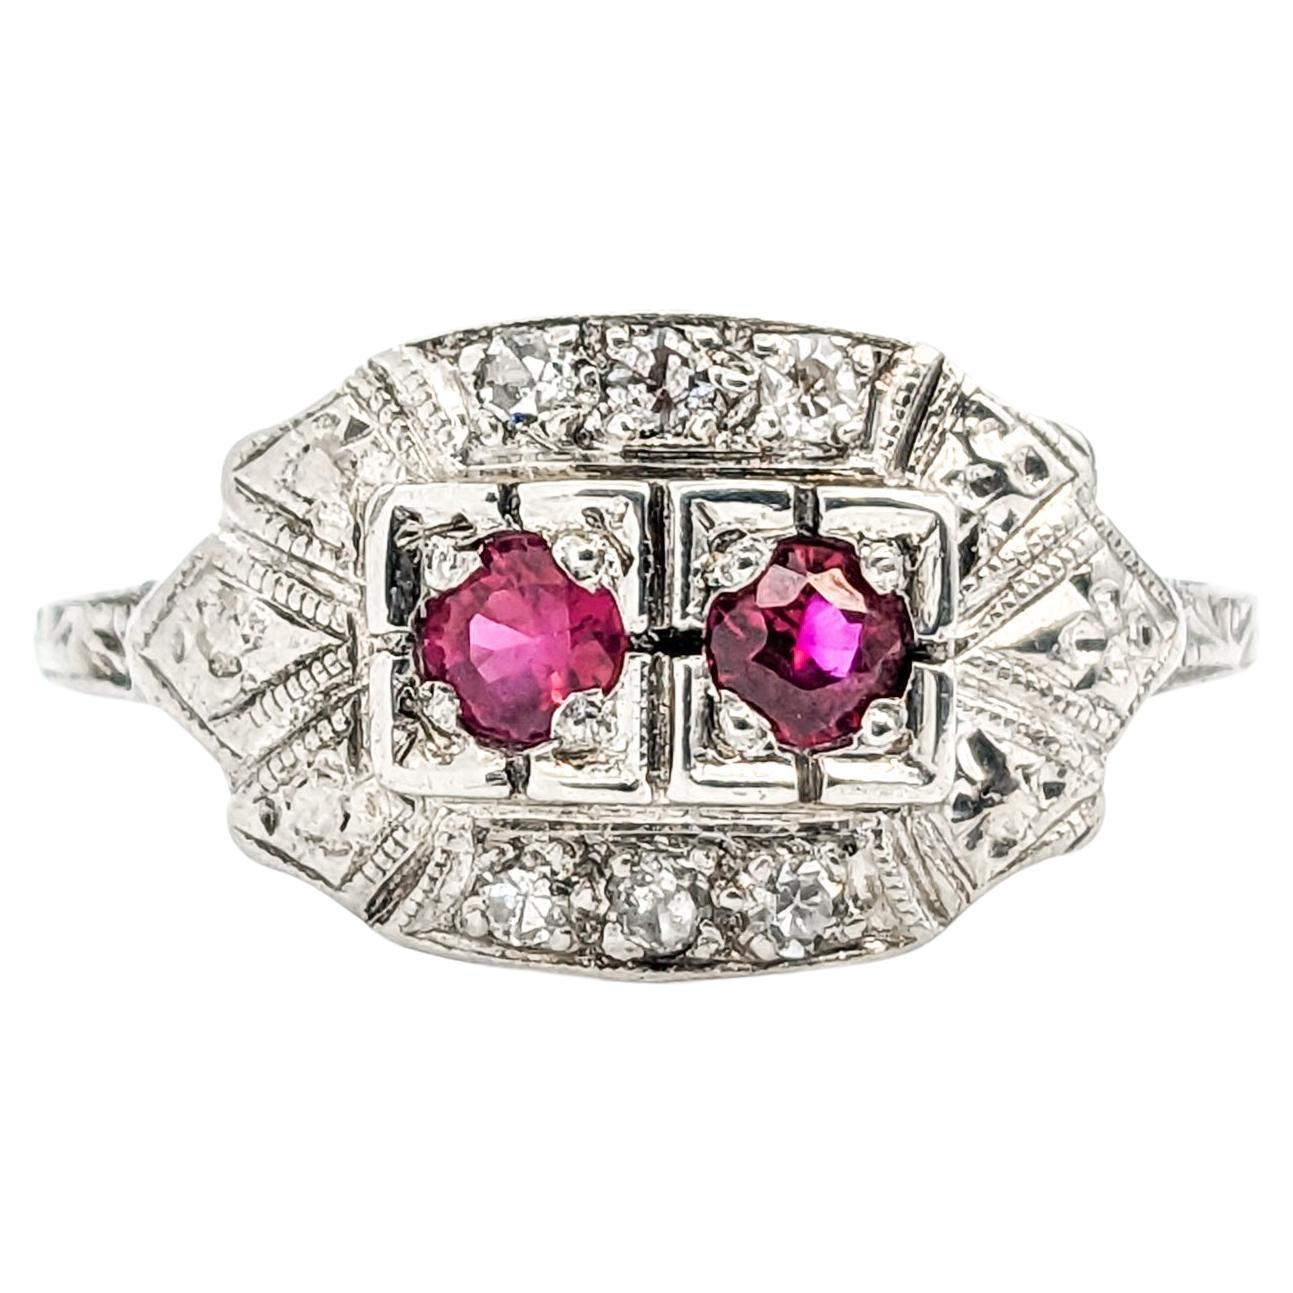 Rubies & Diamond Antique Ring In Platinum For Sale